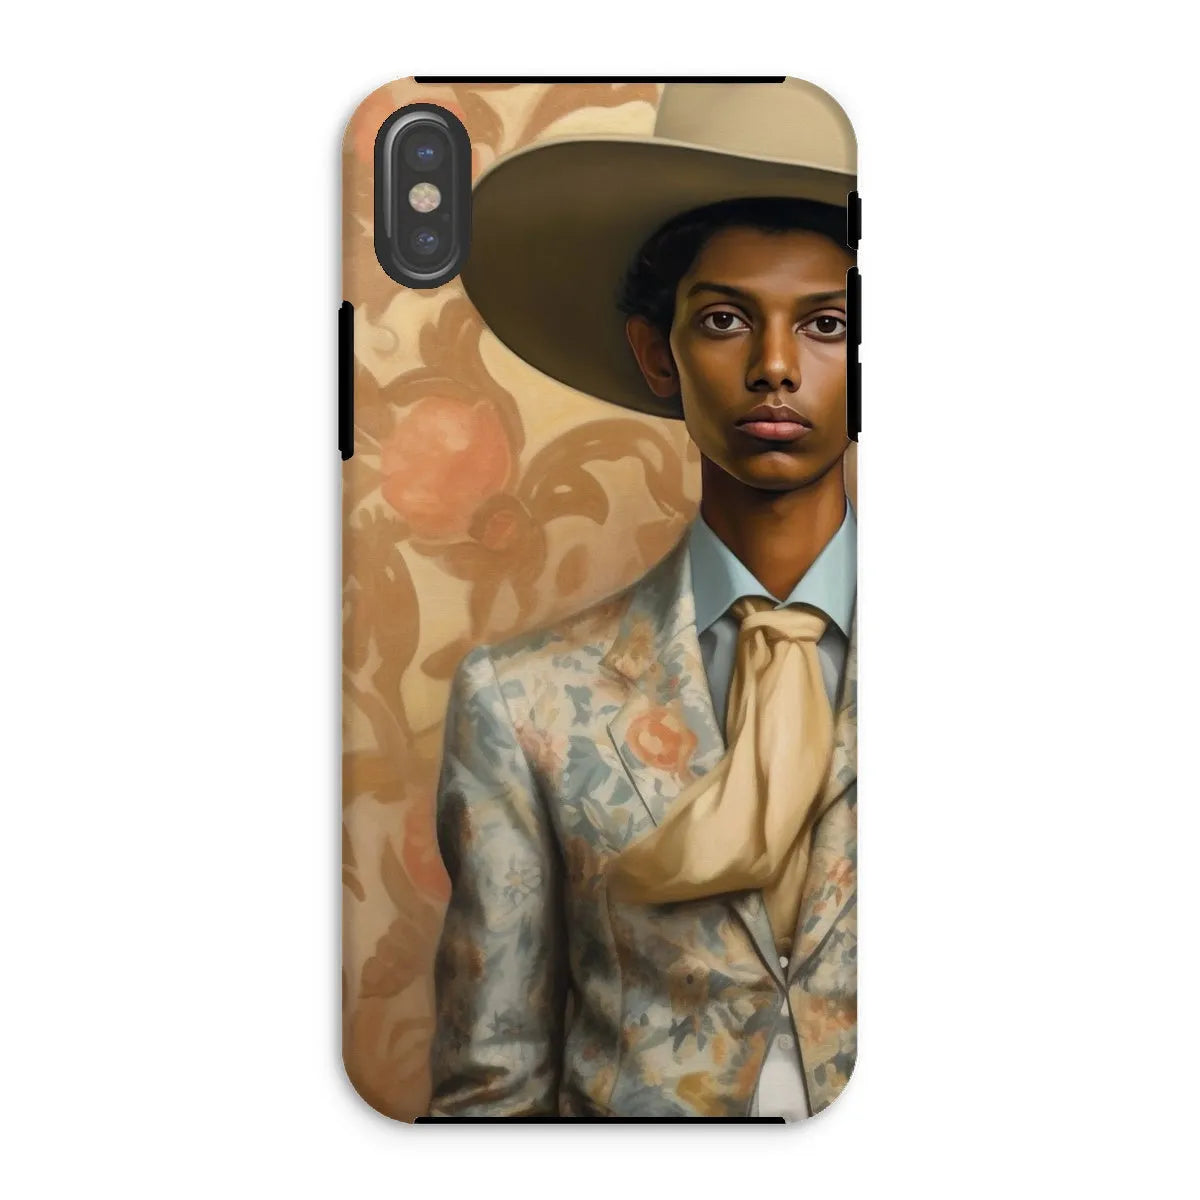 Mallaravan The Transgender Cowboy - F2m Dandy Art Phone Case - Iphone Xs / Matte - Mobile Phone Cases - Aesthetic Art